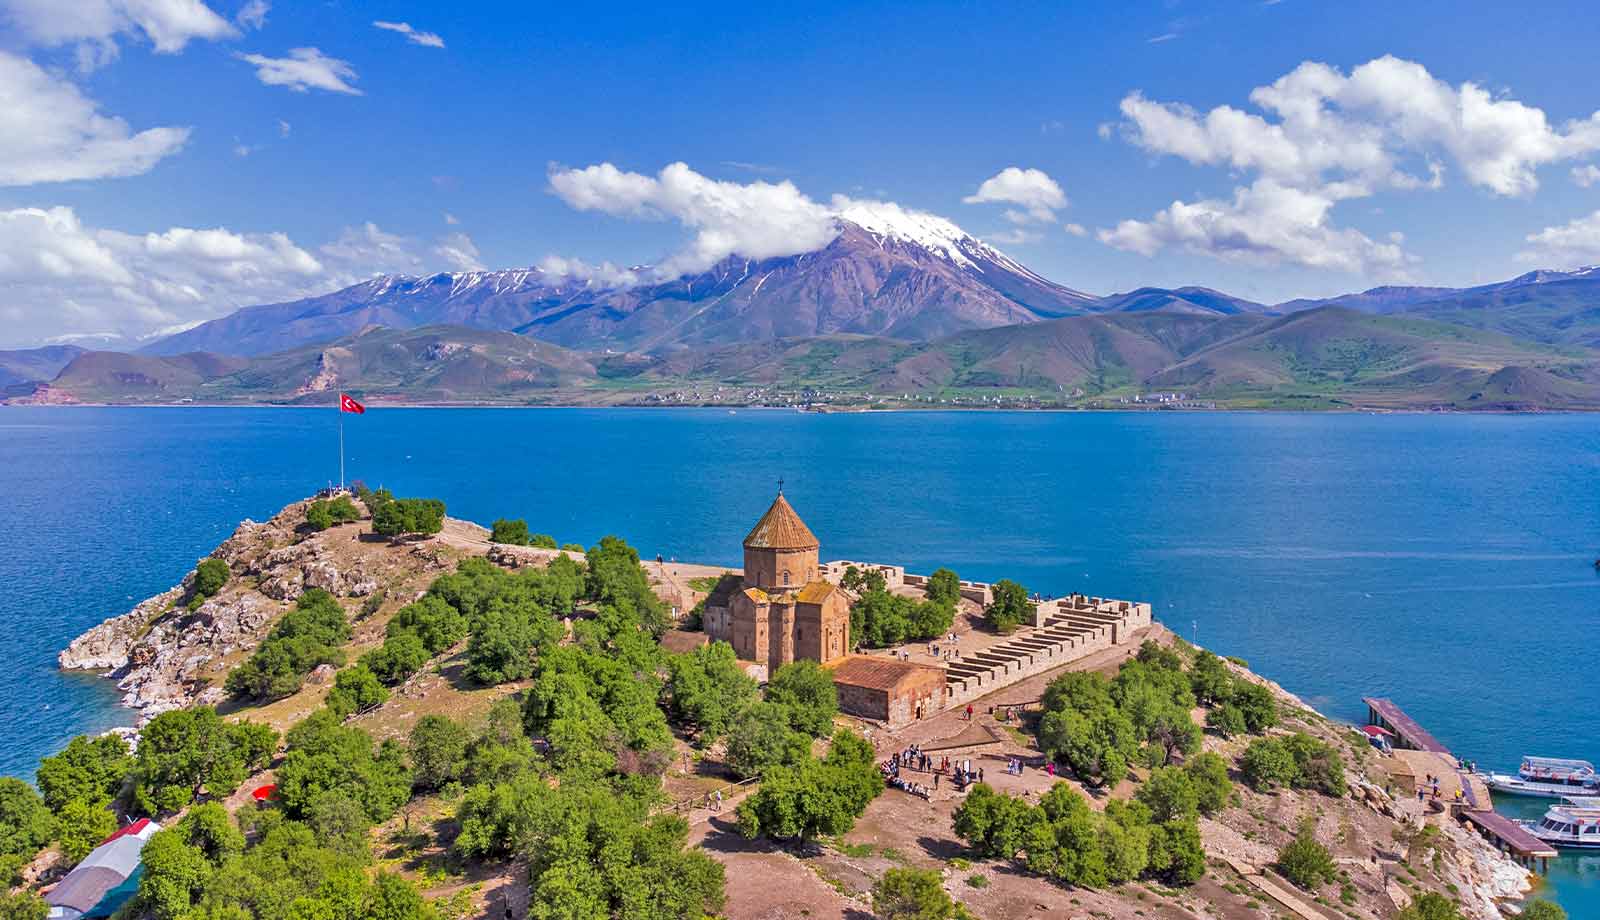 Akdamar Island, Lake and Armenian Church